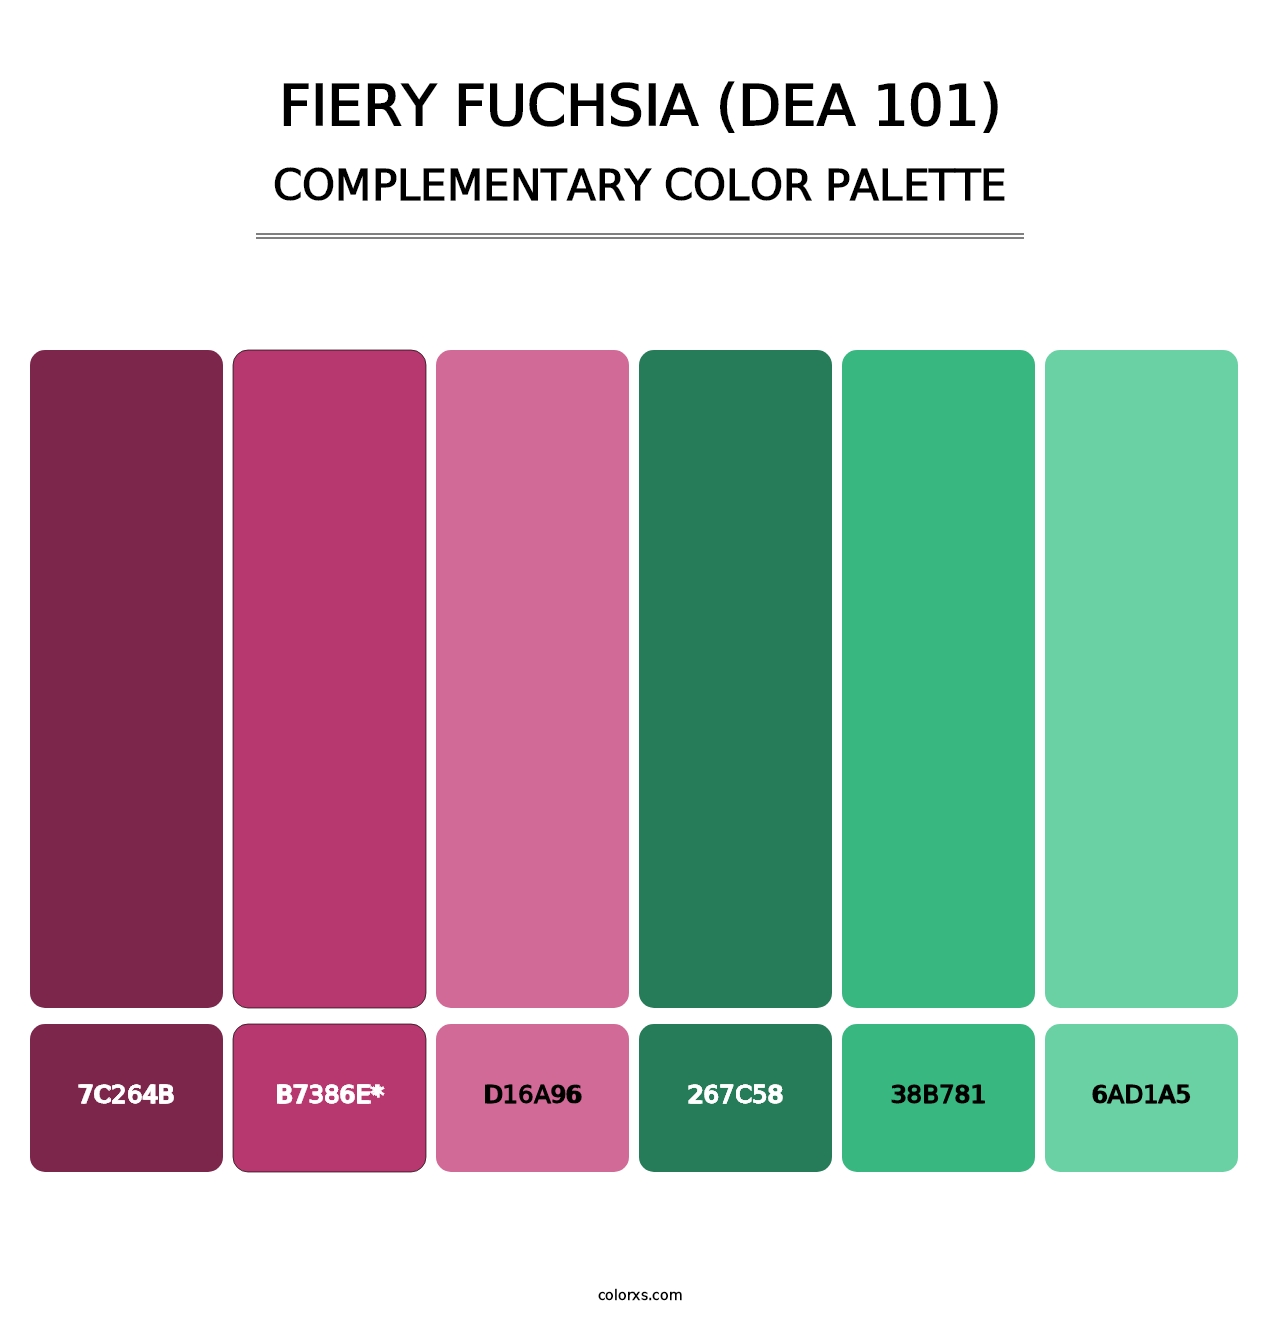 Fiery Fuchsia (DEA 101) - Complementary Color Palette